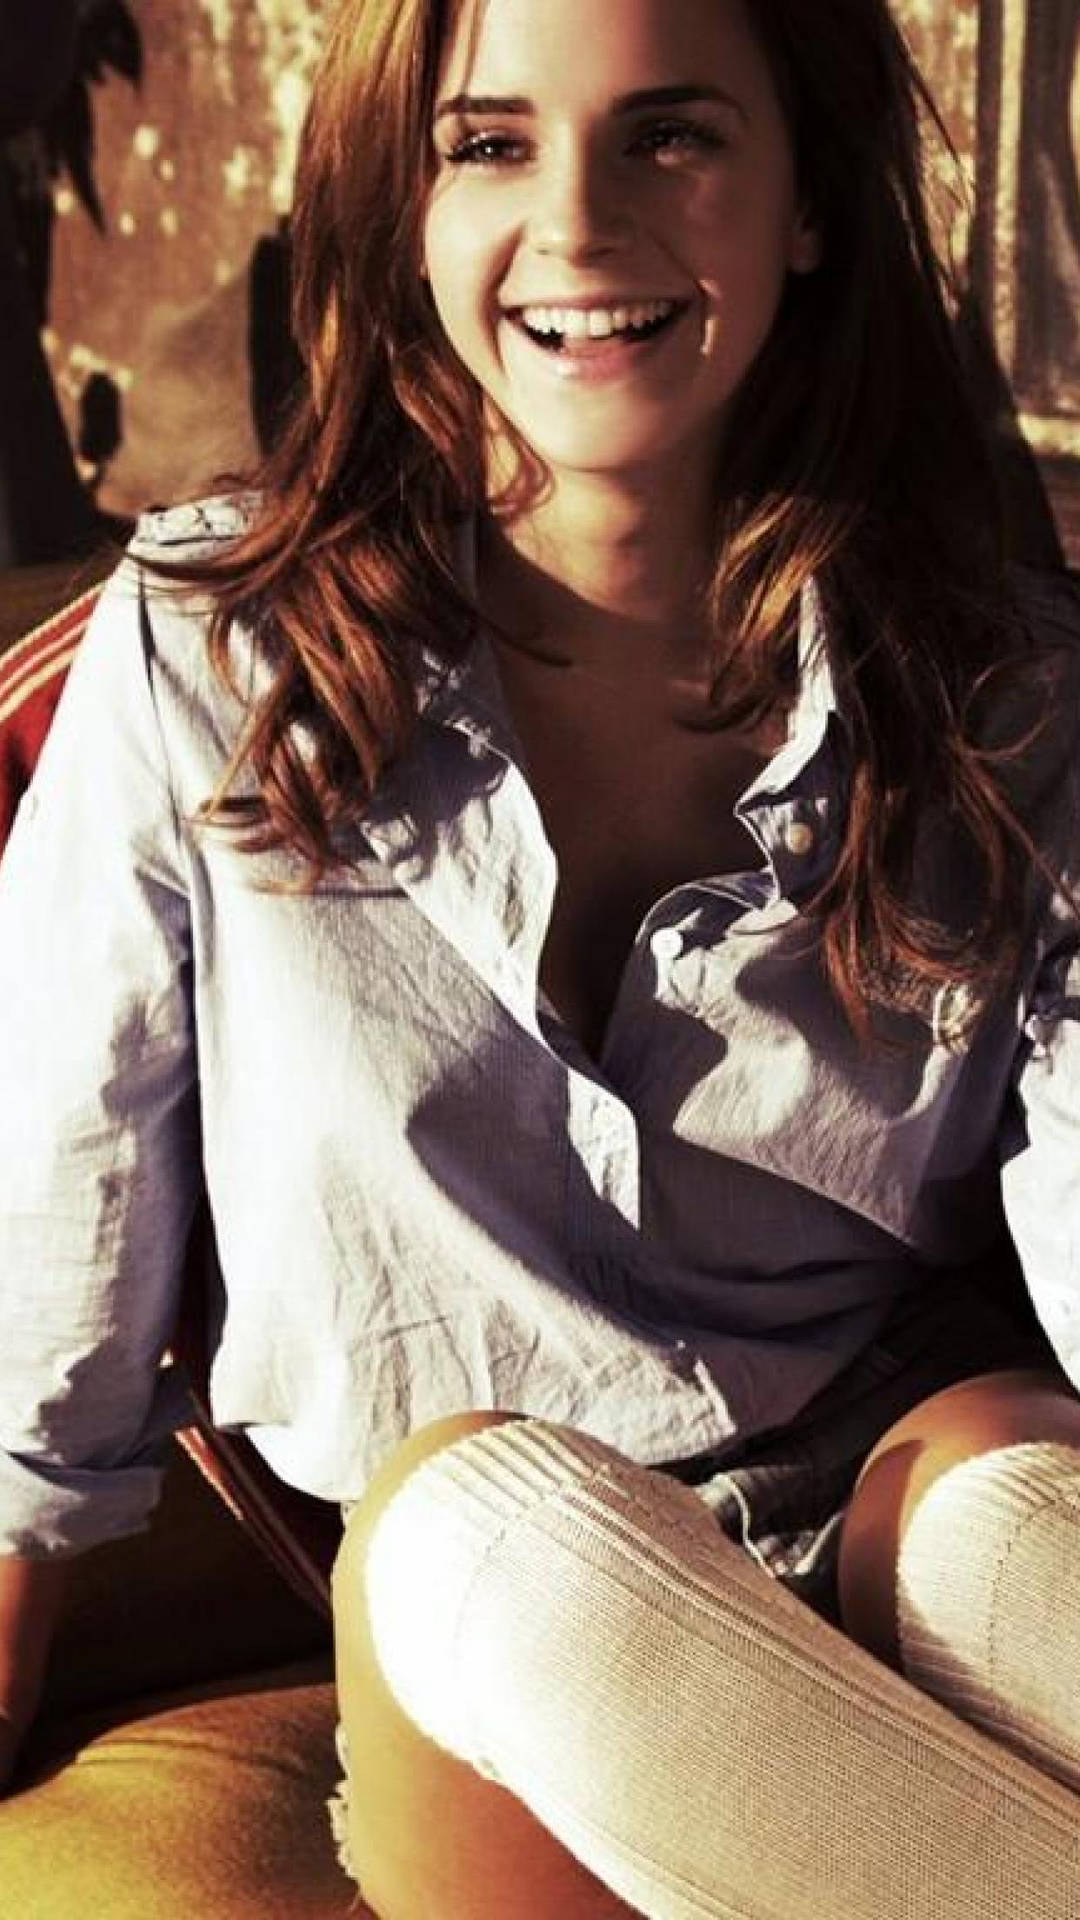 Emma Watson wearing an Adorable Outfit Wallpaper